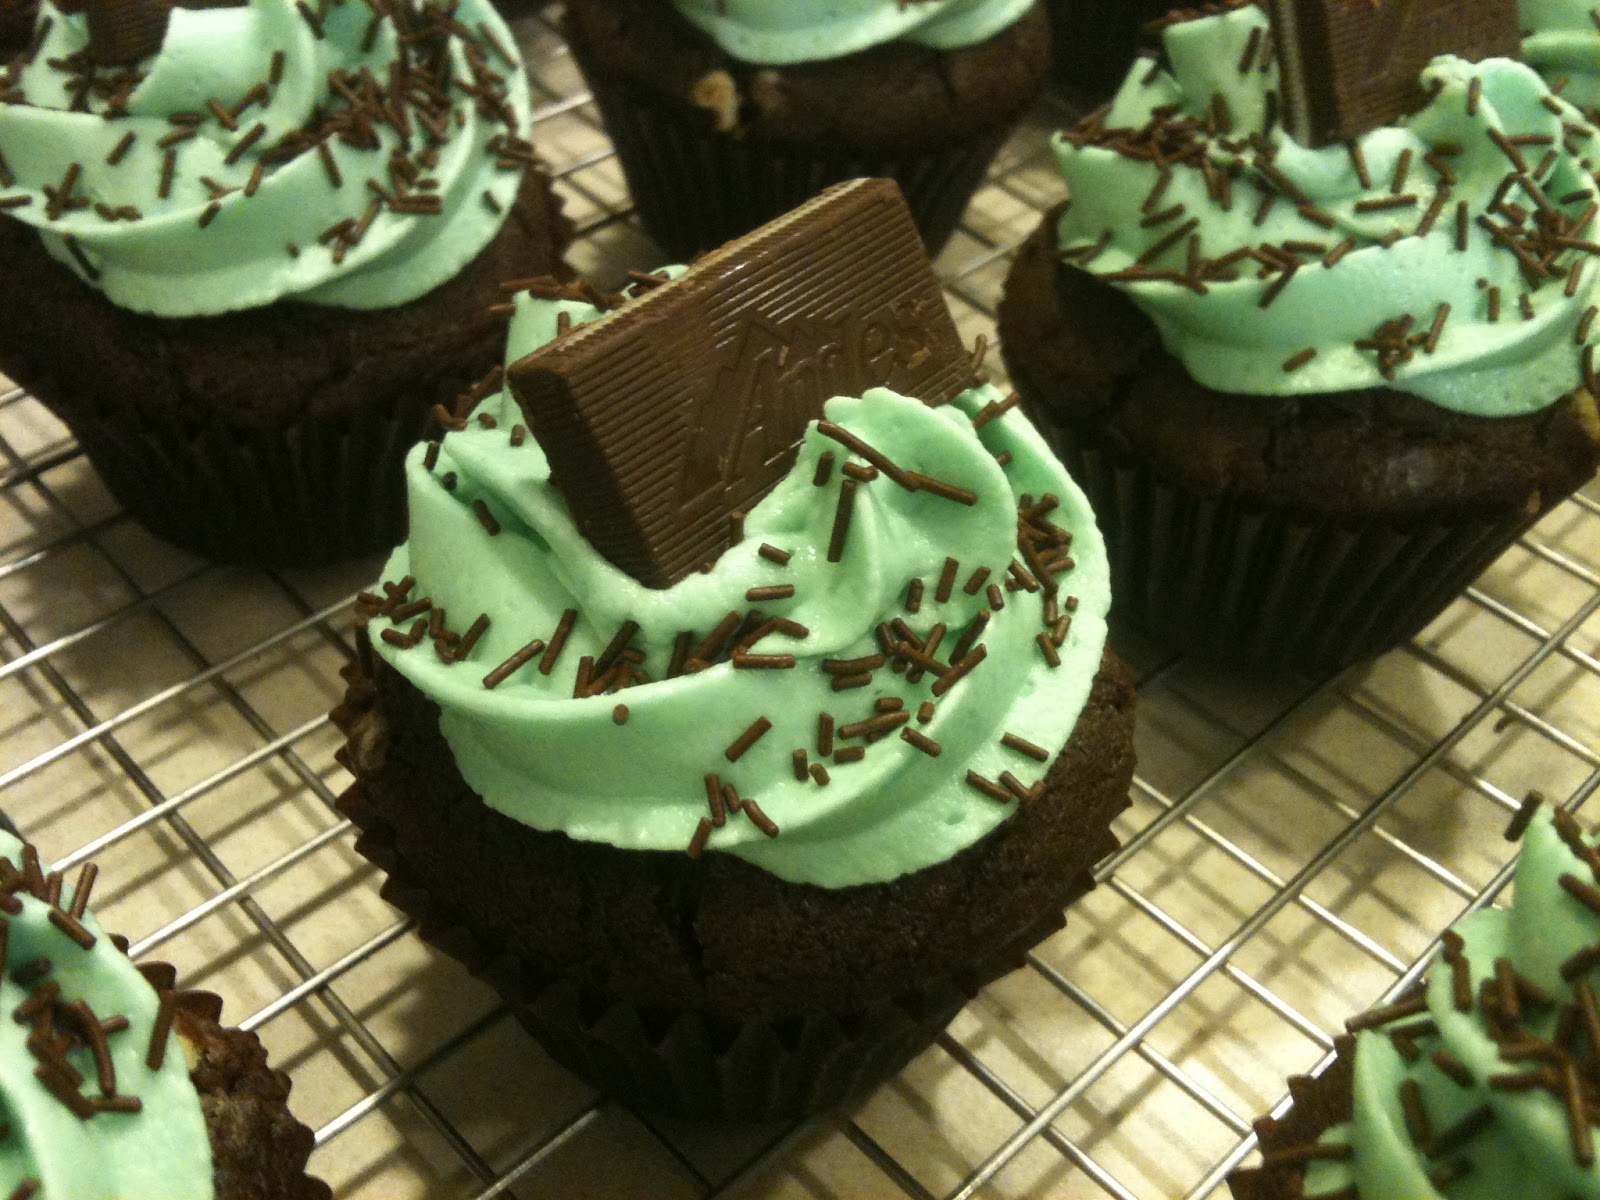 Chocolate Mint Cupcakes